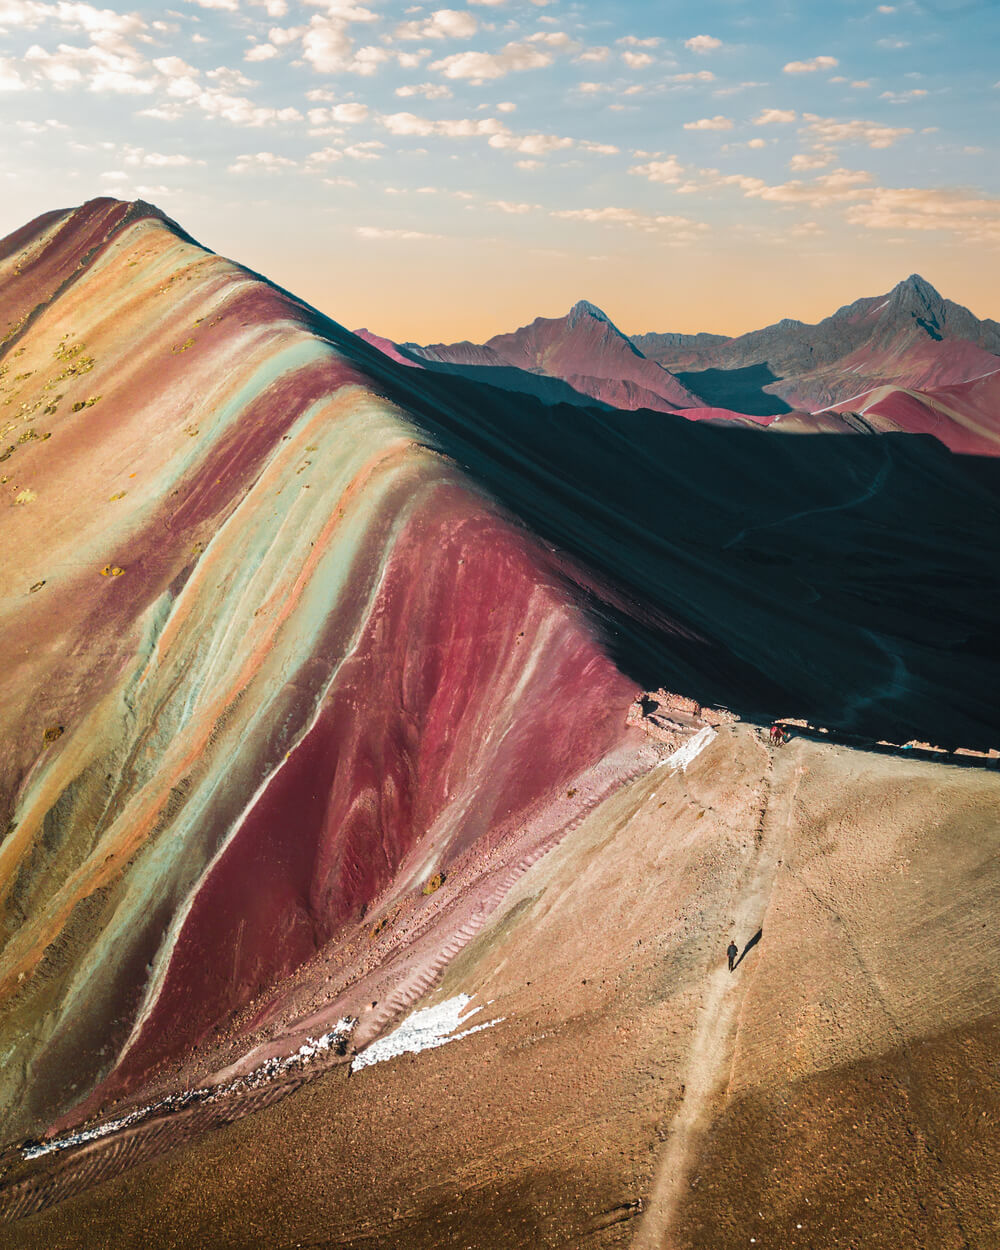 image of Vinicunca or Rainbow Mountain in Peru. Image by Jordan Hammond